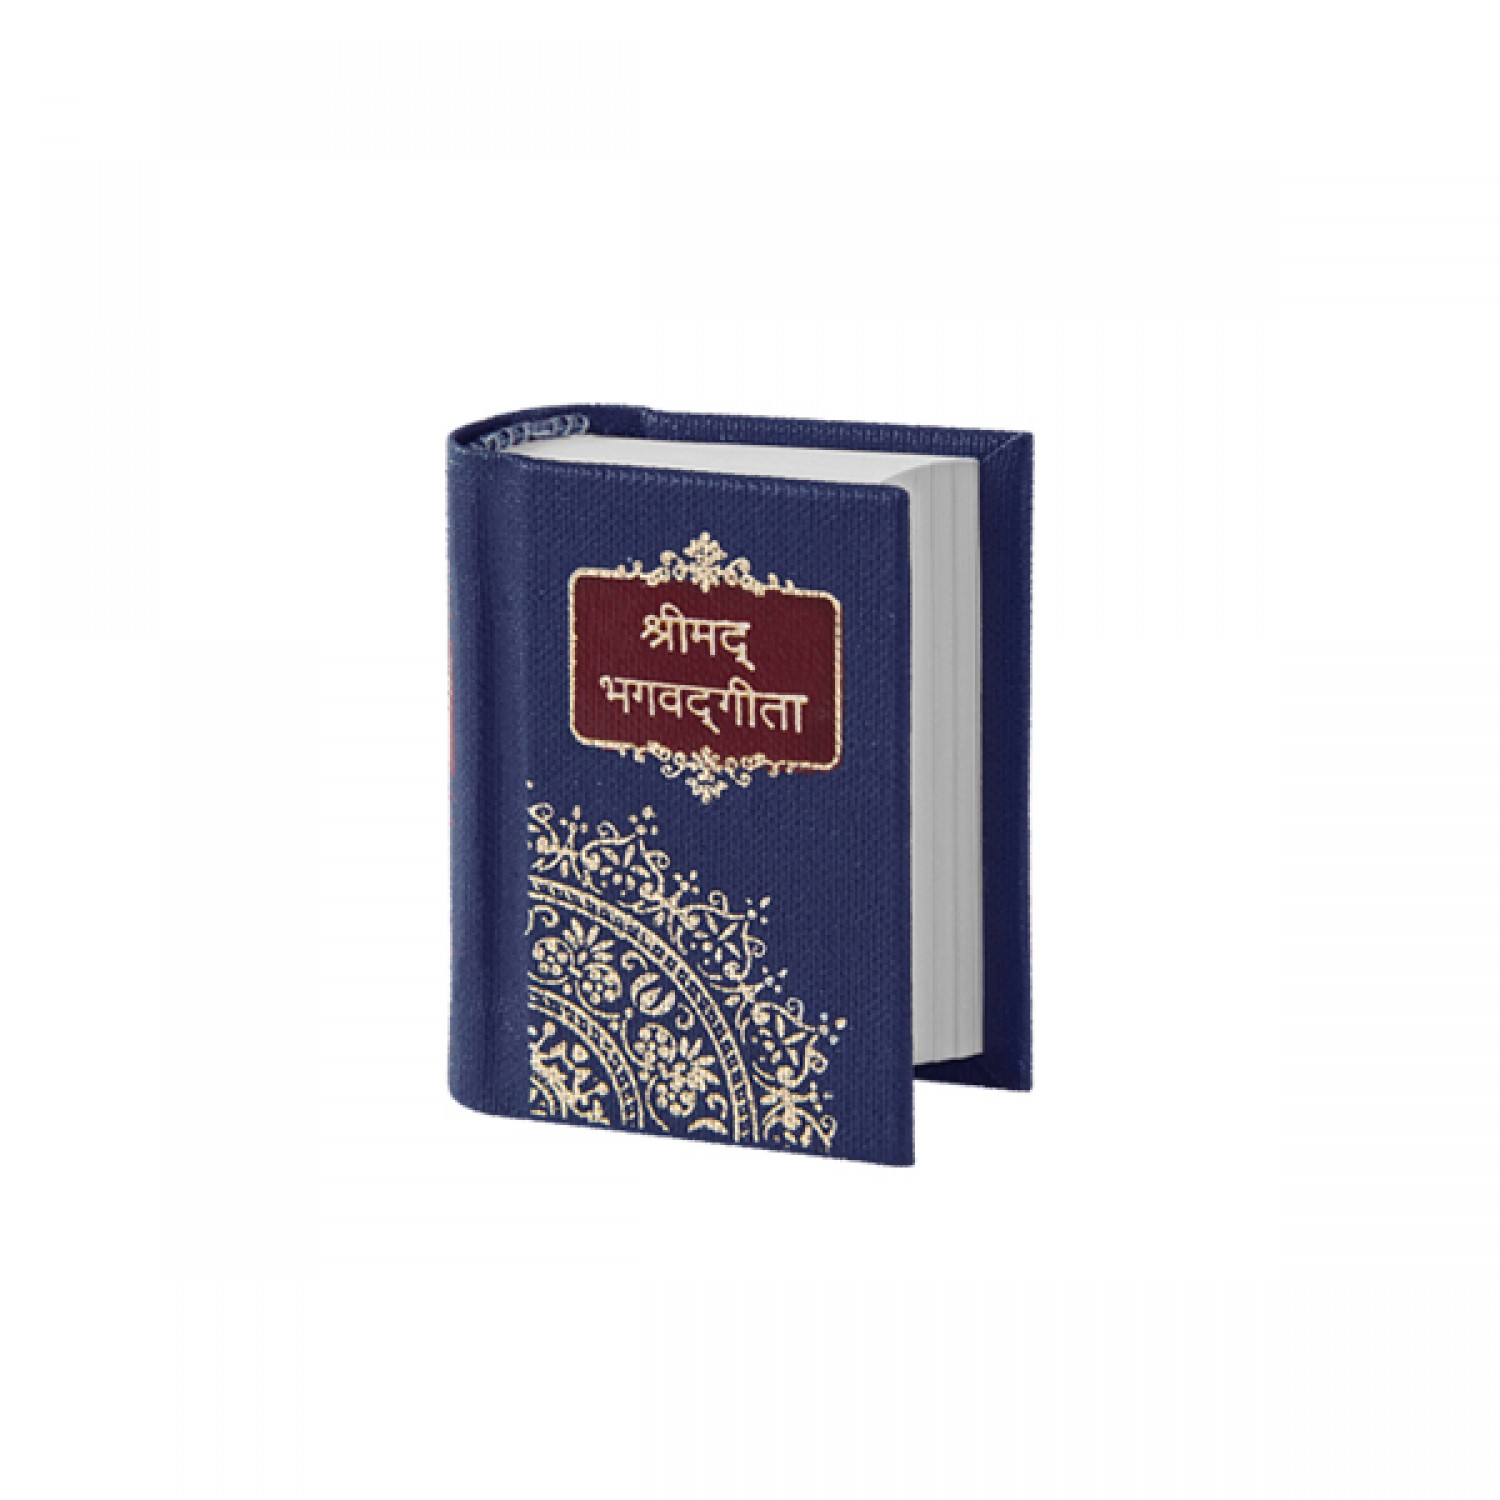 bhagavad-gita-a9-hindi-pocket-edition-books-books